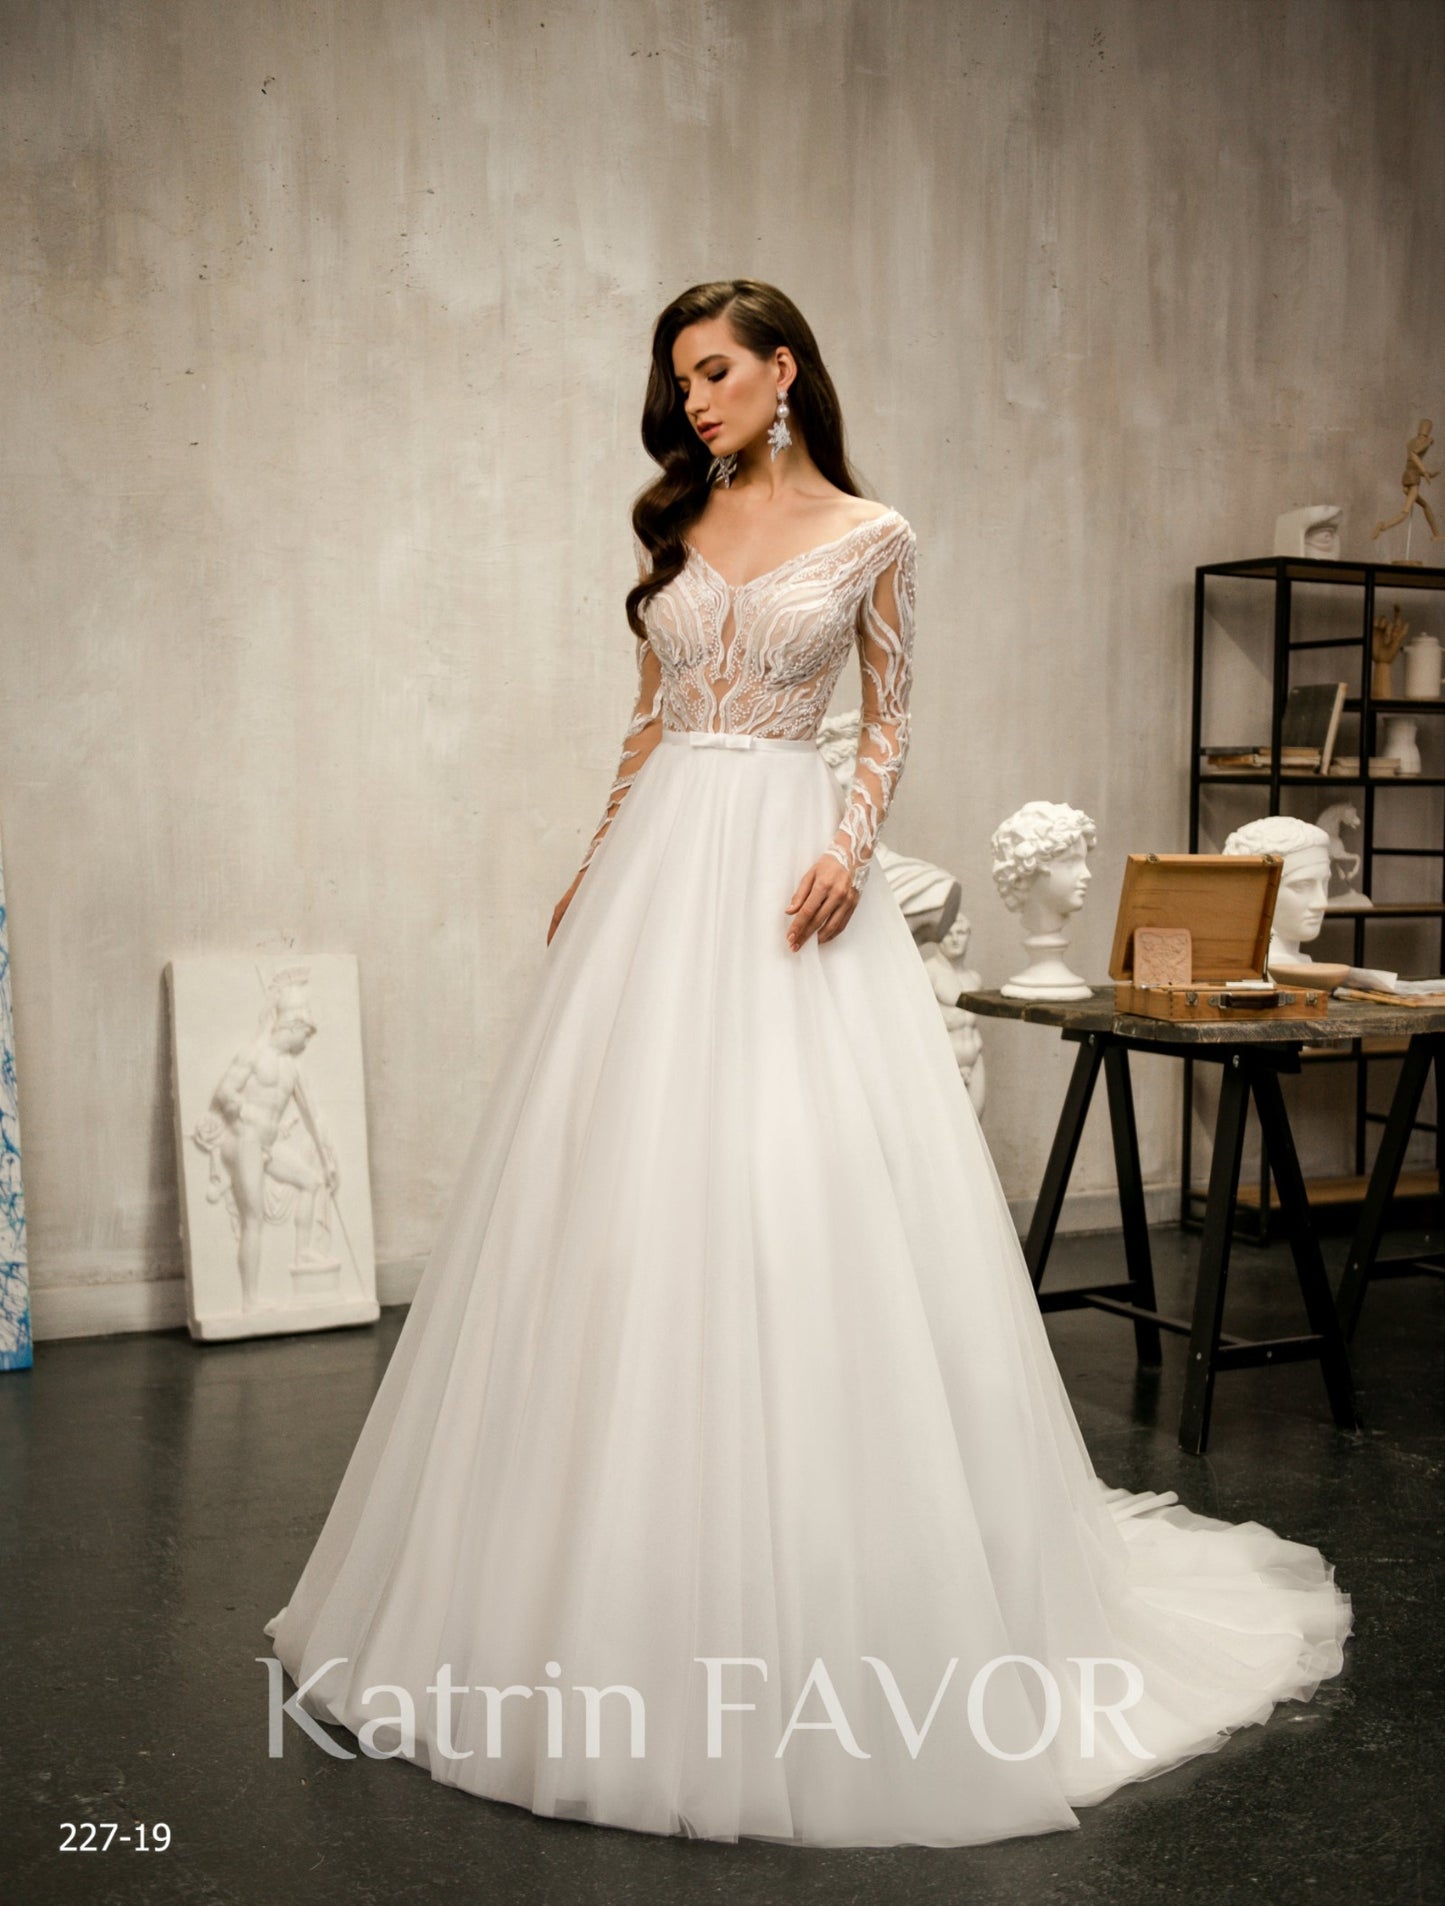 KatrinFAVORboutique-Lace long sleeve wedding dress